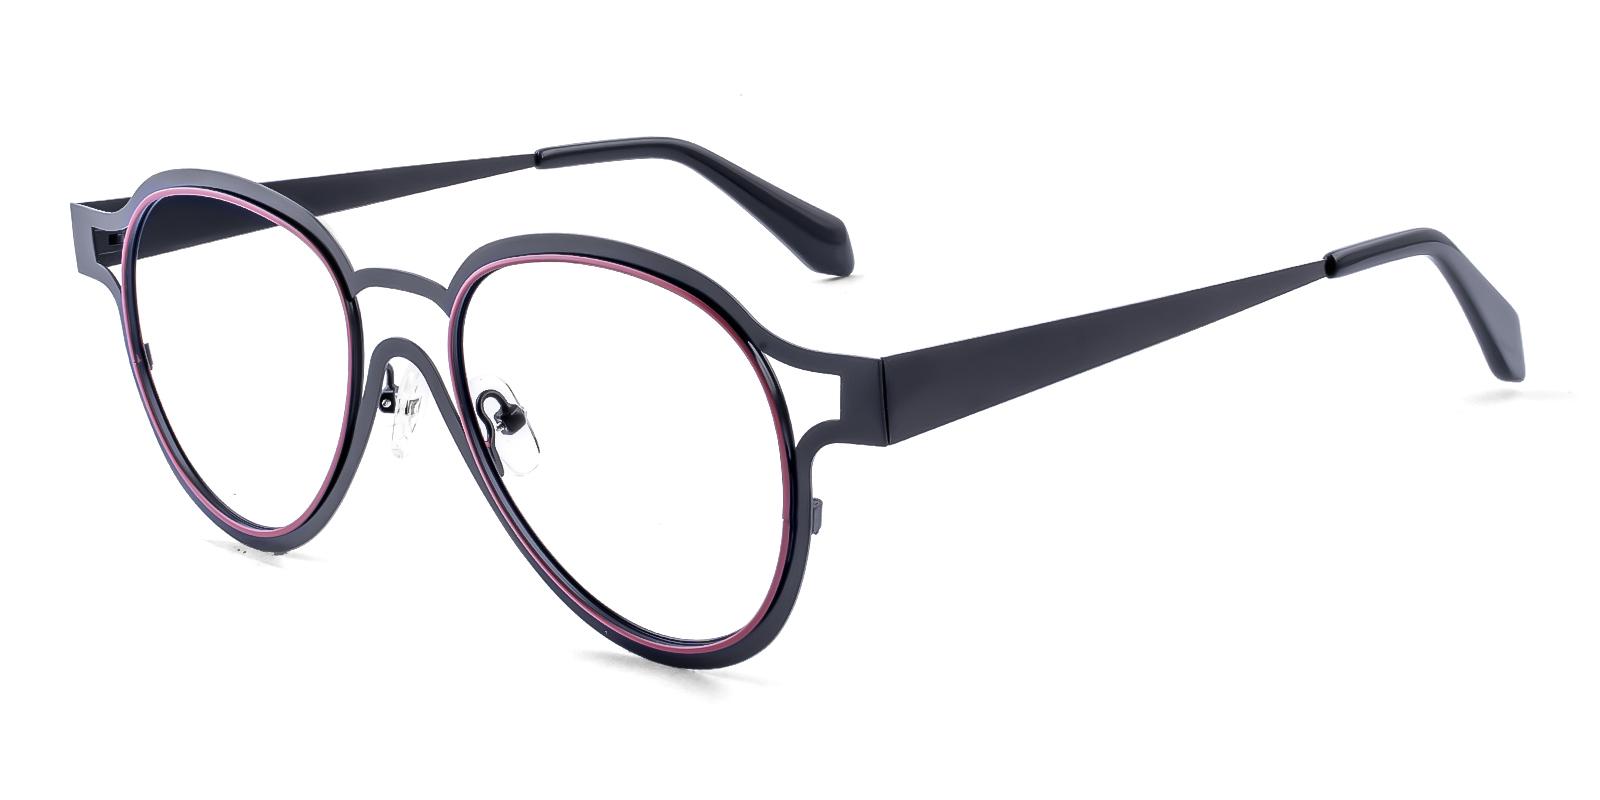 Mountly Black Metal Eyeglasses , NosePads Frames from ABBE Glasses